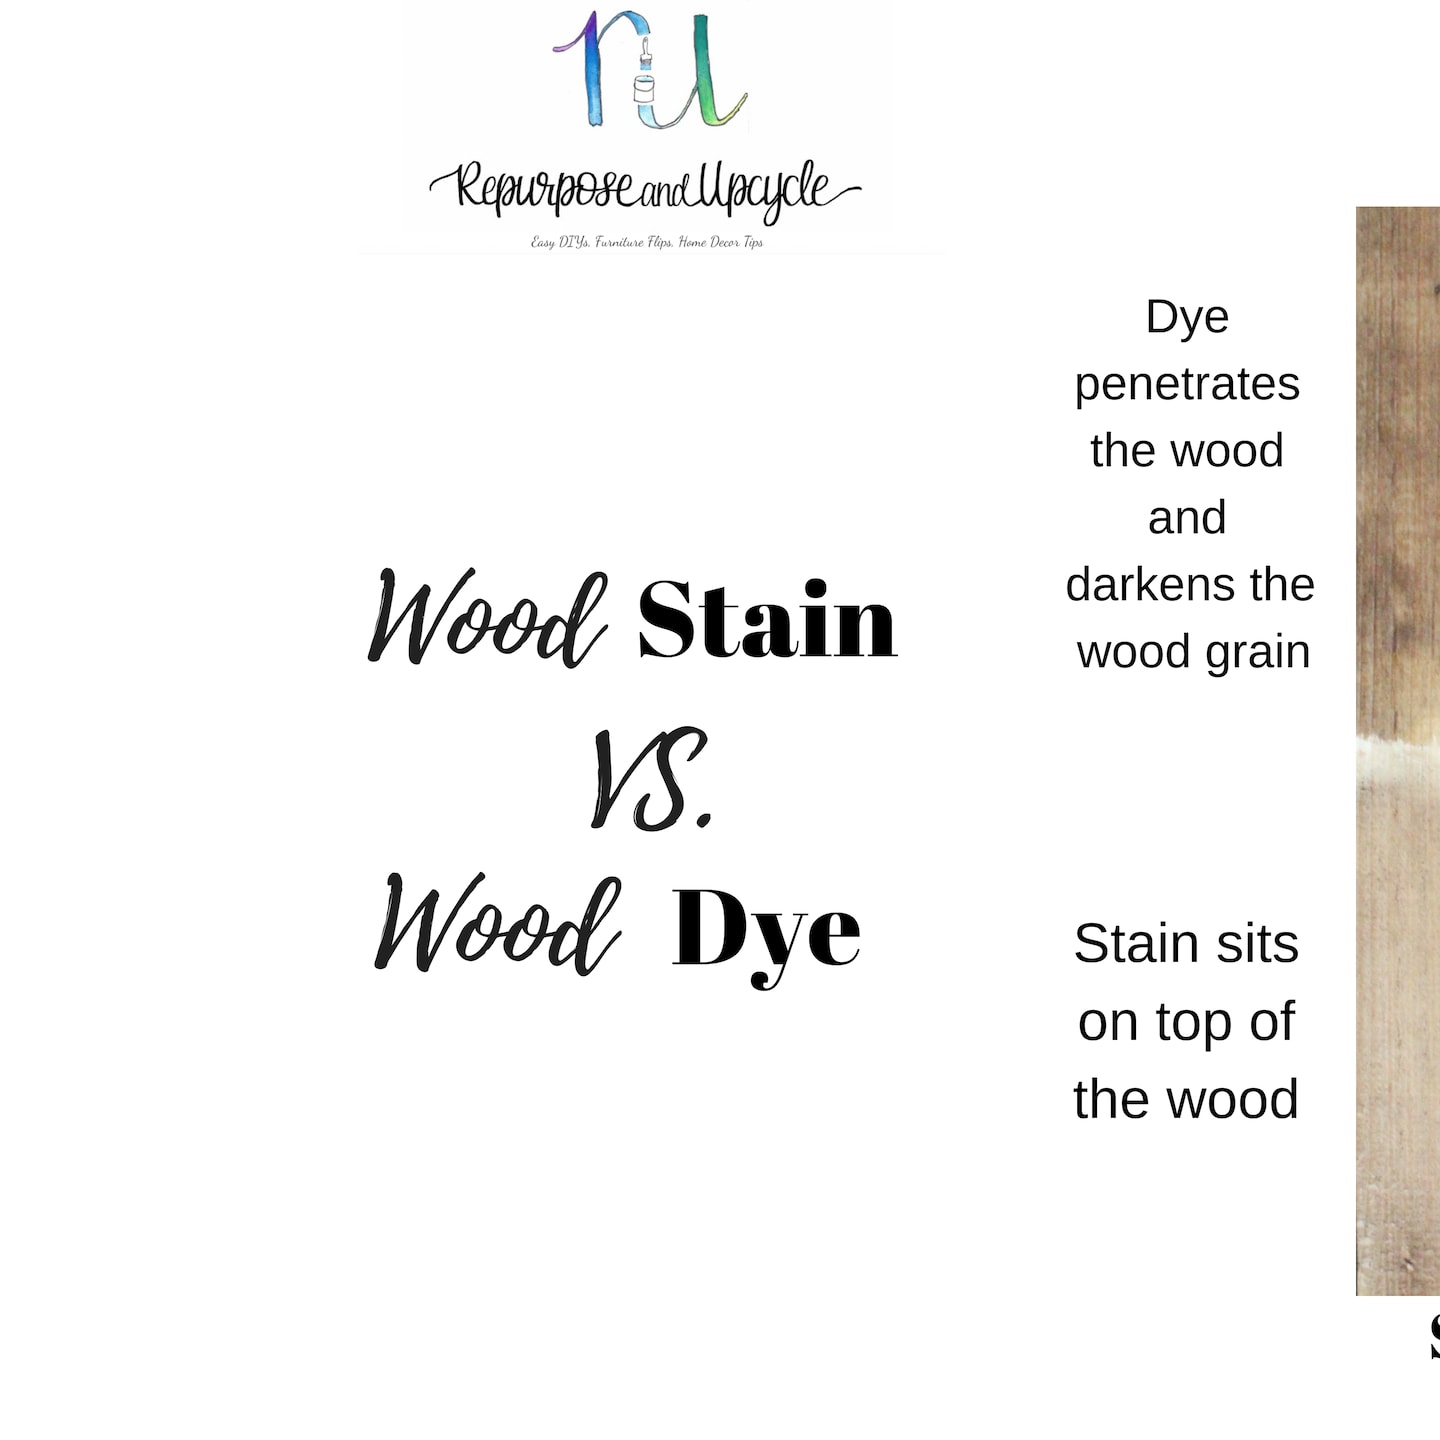 Transtint Wood Dyes vs. Rit Fabric Dyes